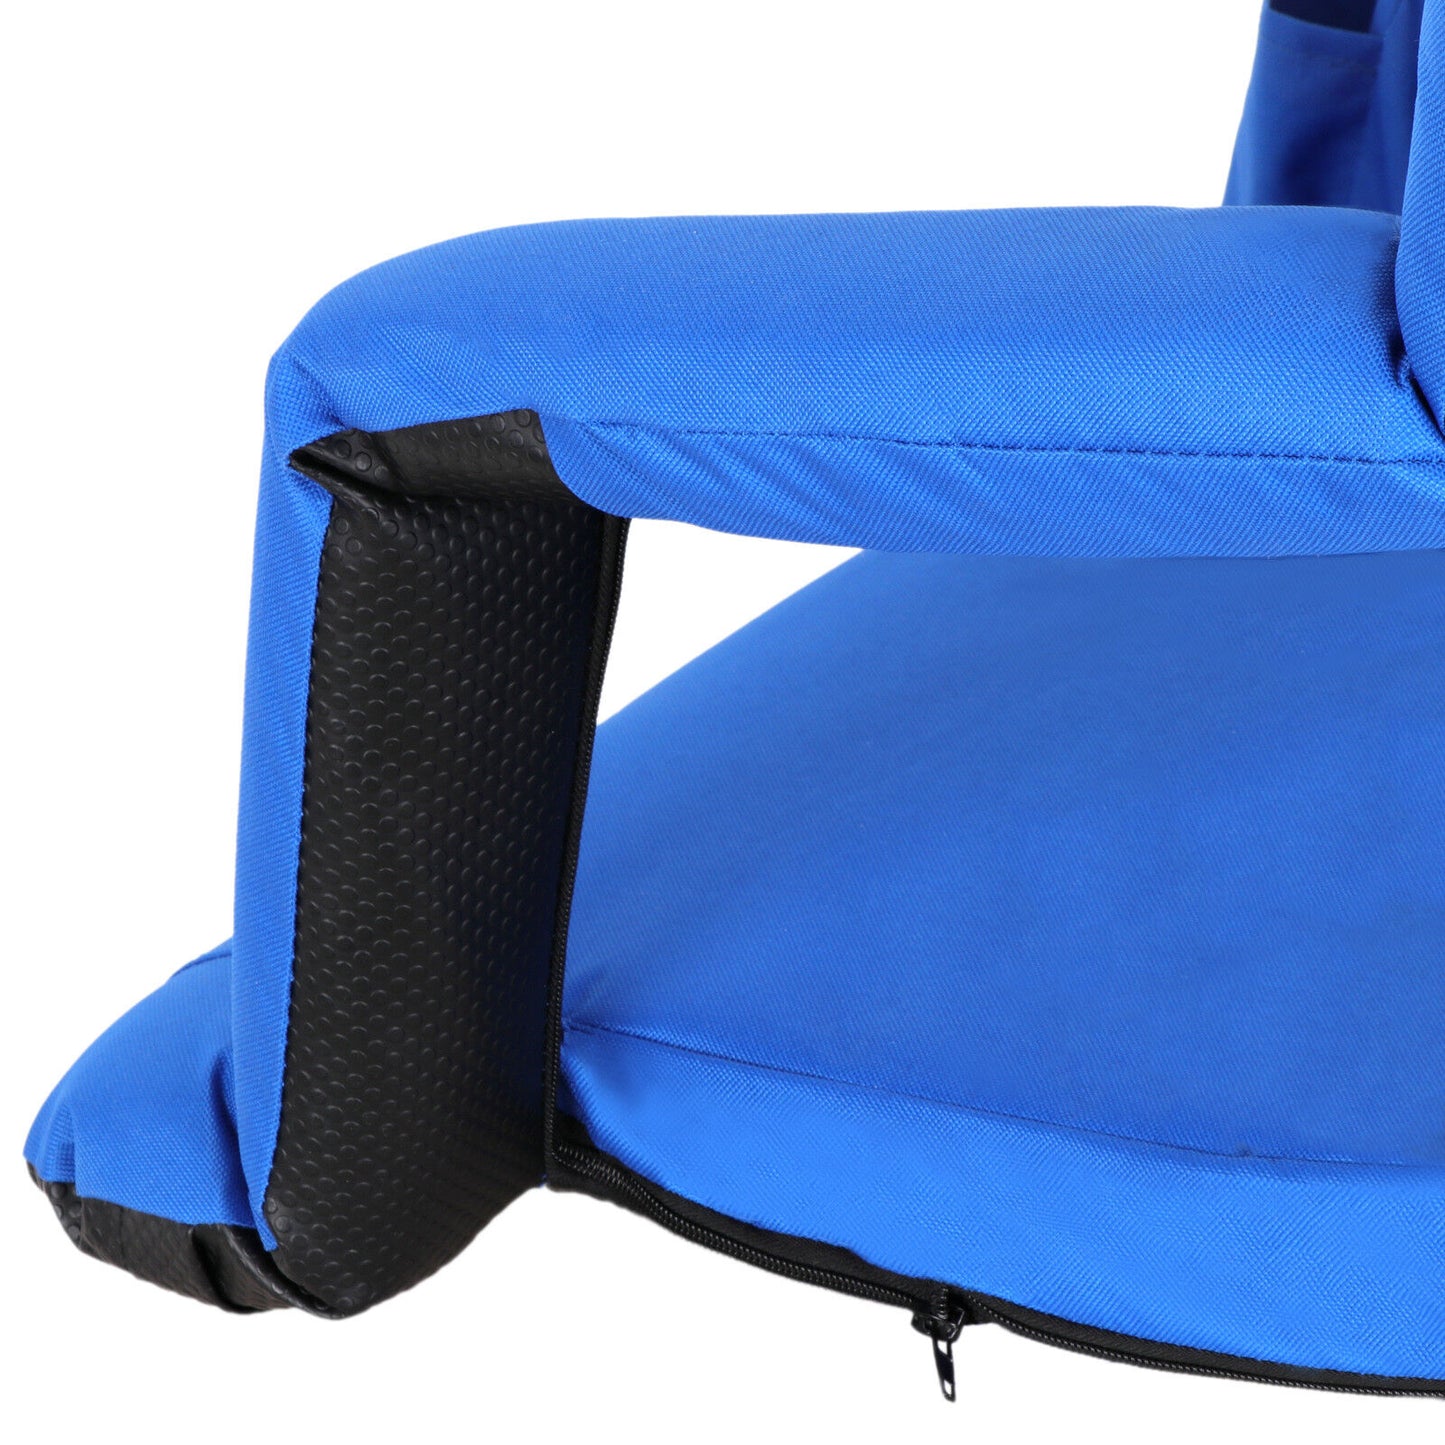 Blue Stadium Seats Chairs for Bleachers Waterproof  - 5 Reclining Positions